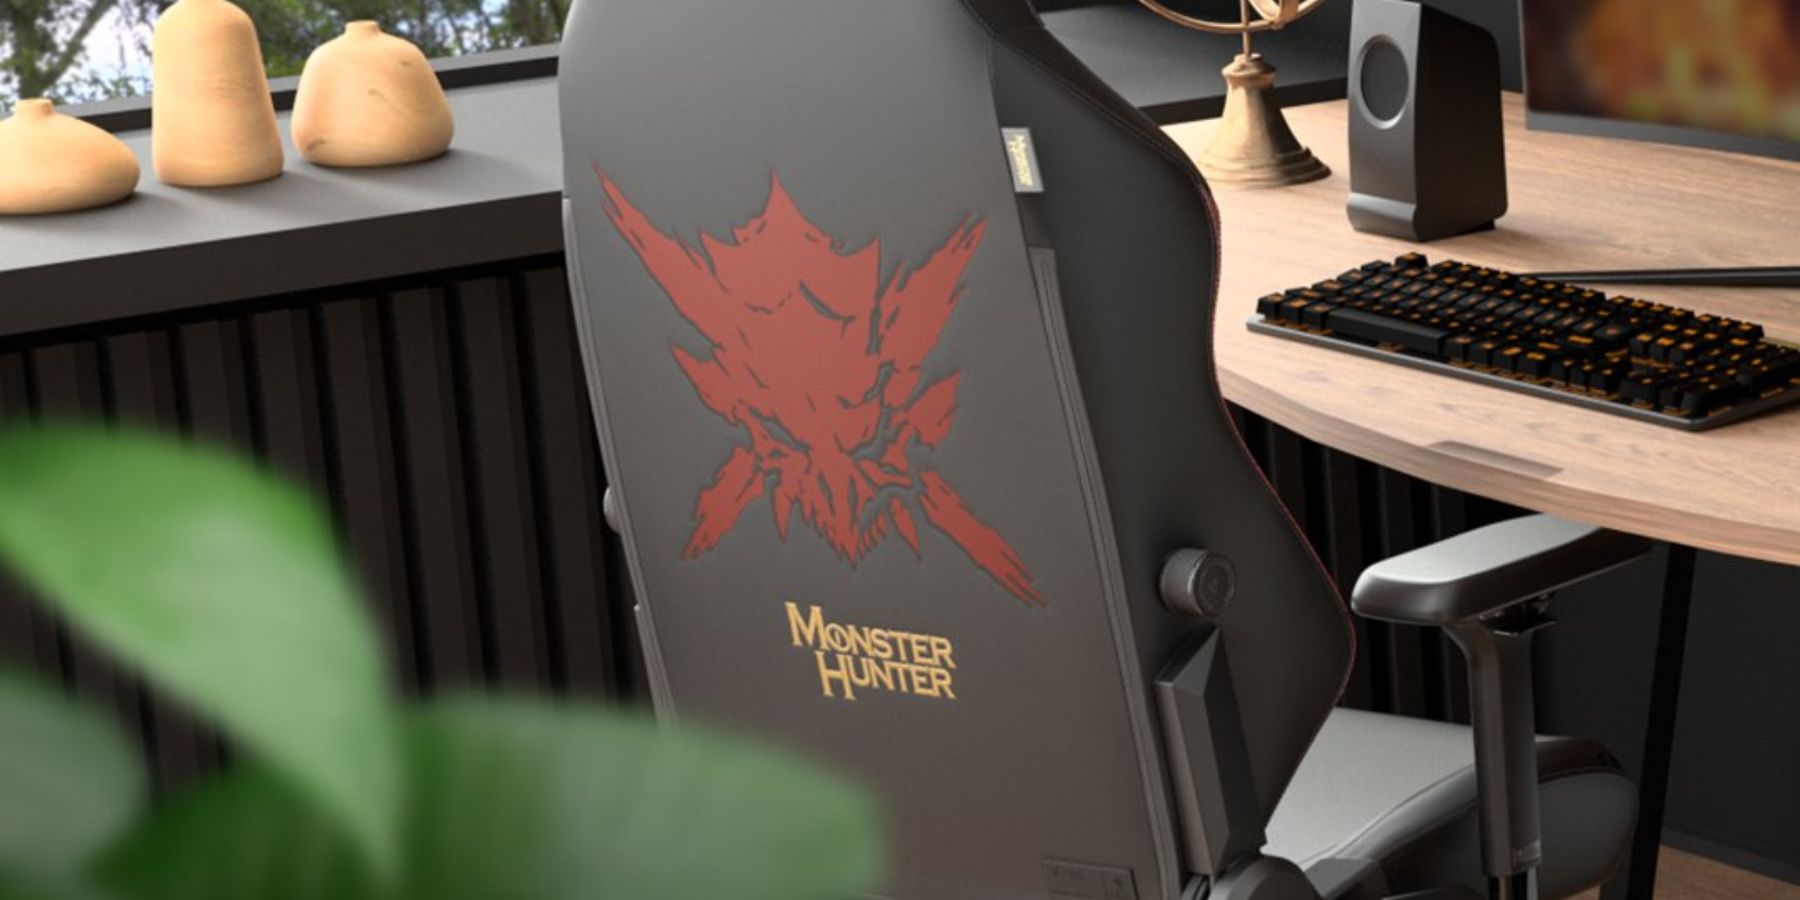 secretlab monster hunter edition gaming chair